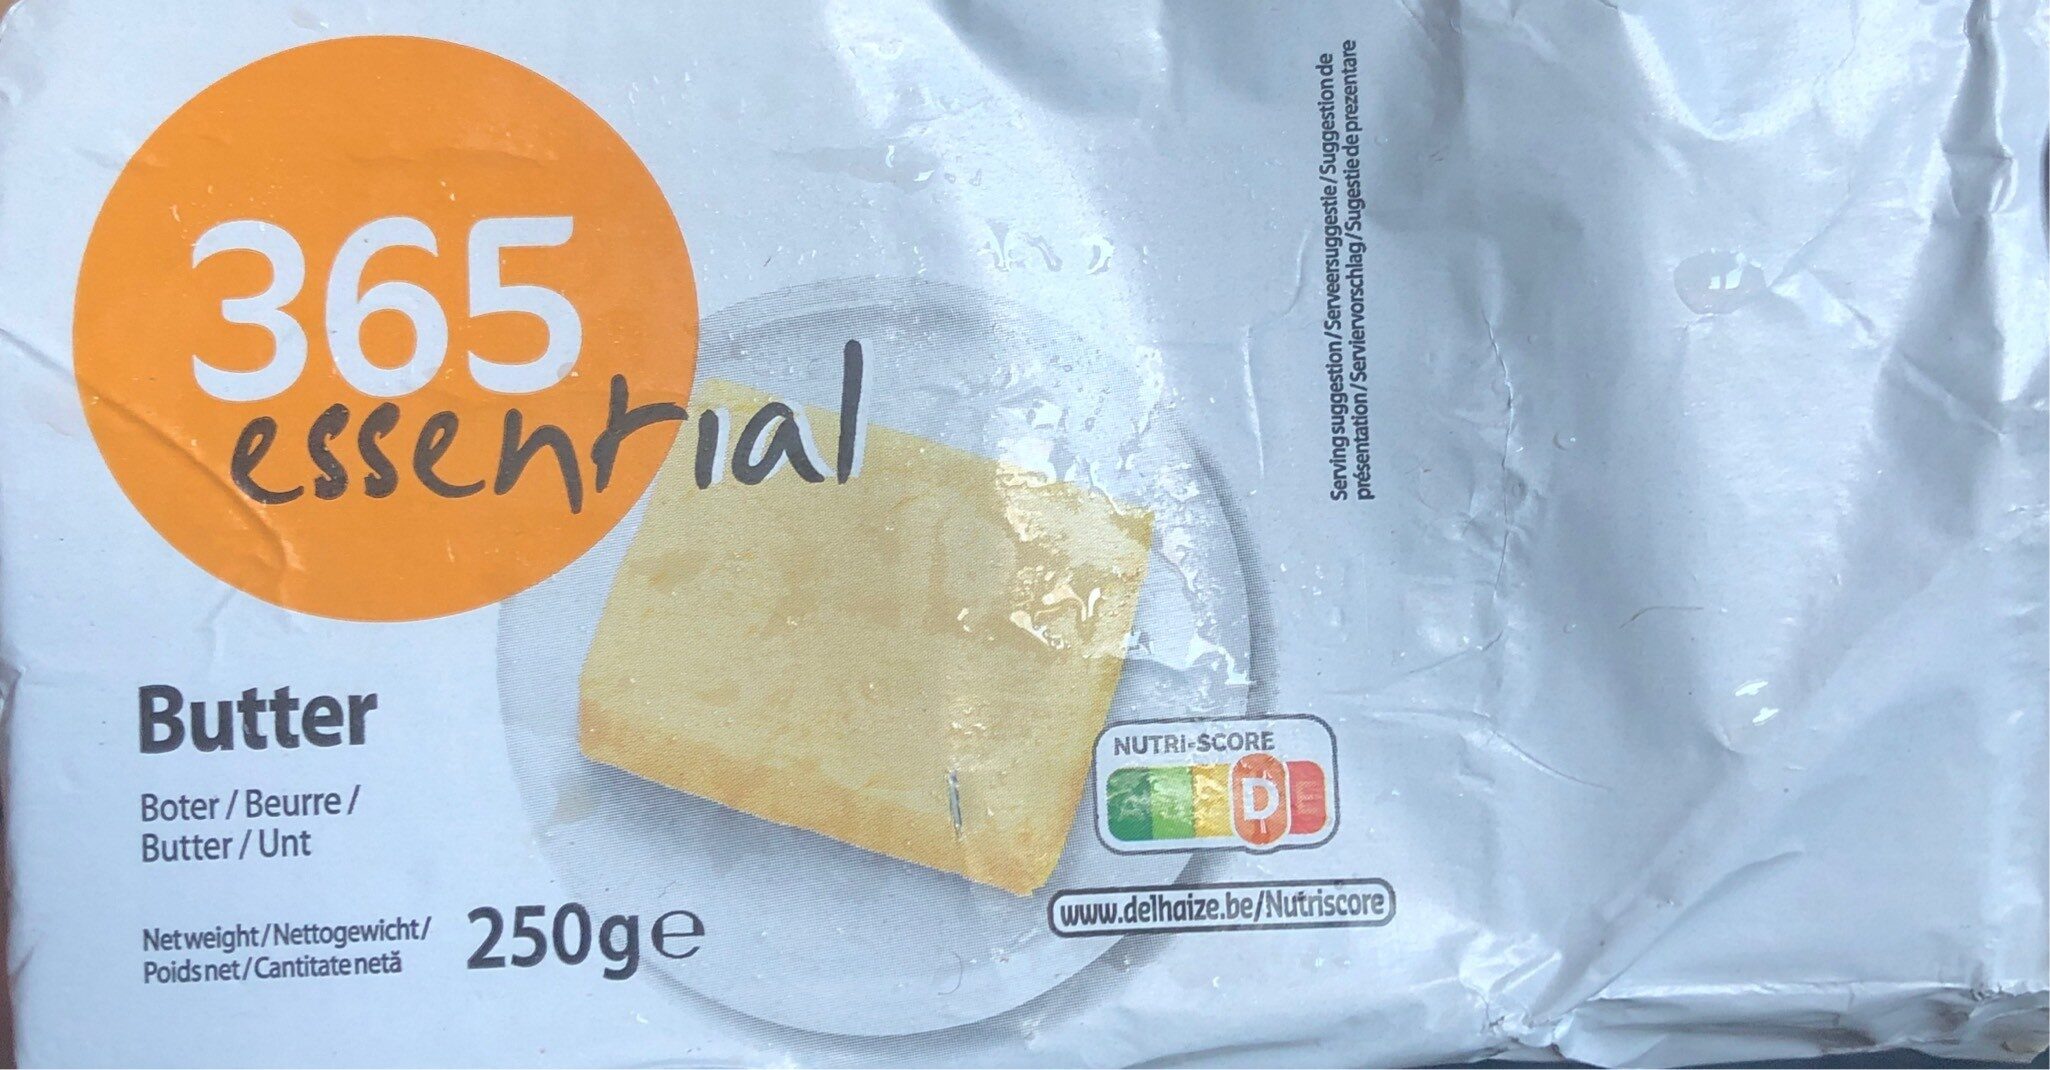 365 essential Butter - Produit